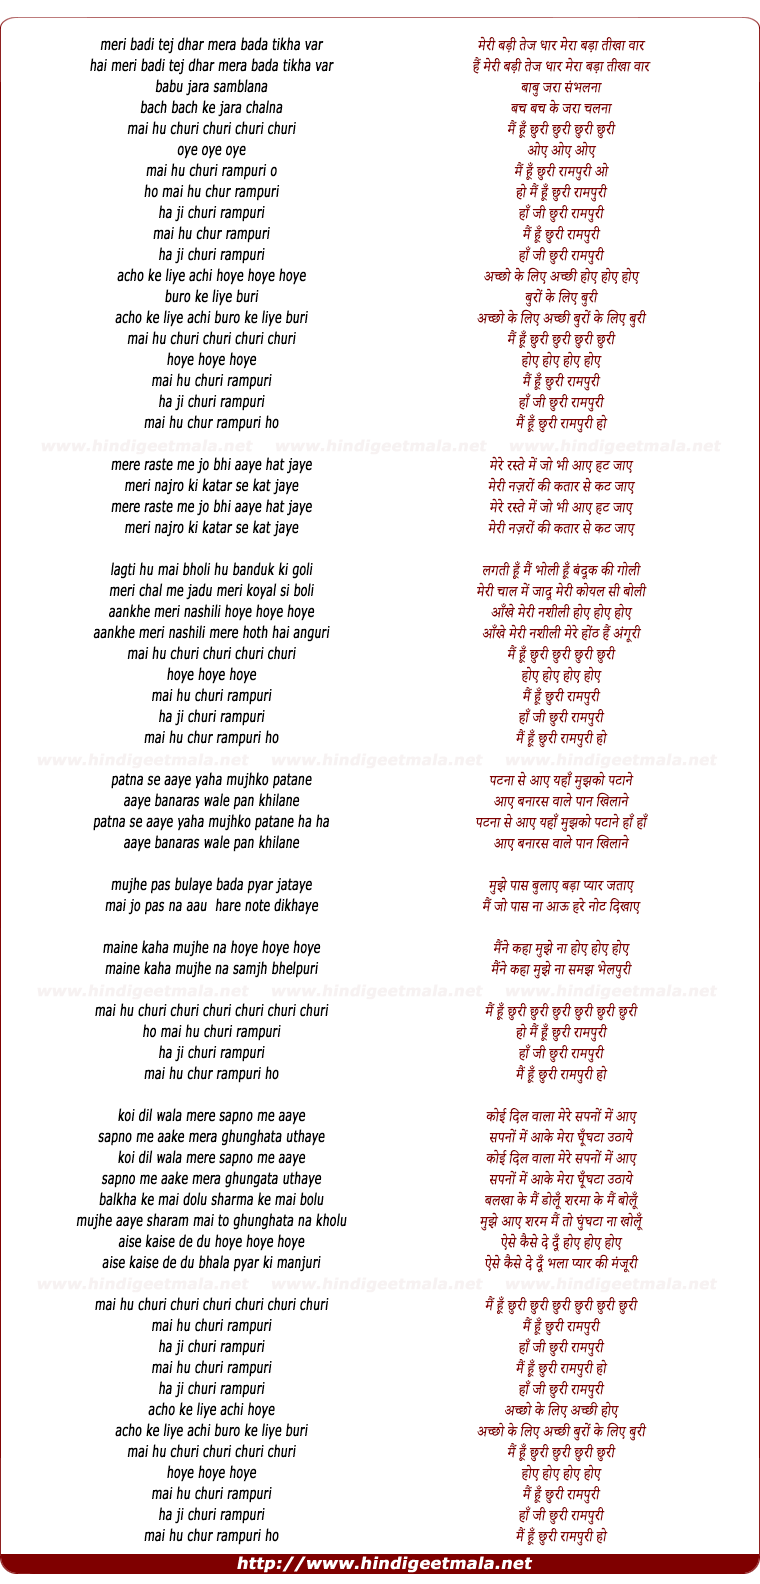 lyrics of song Mai Hun Churi Rampuri